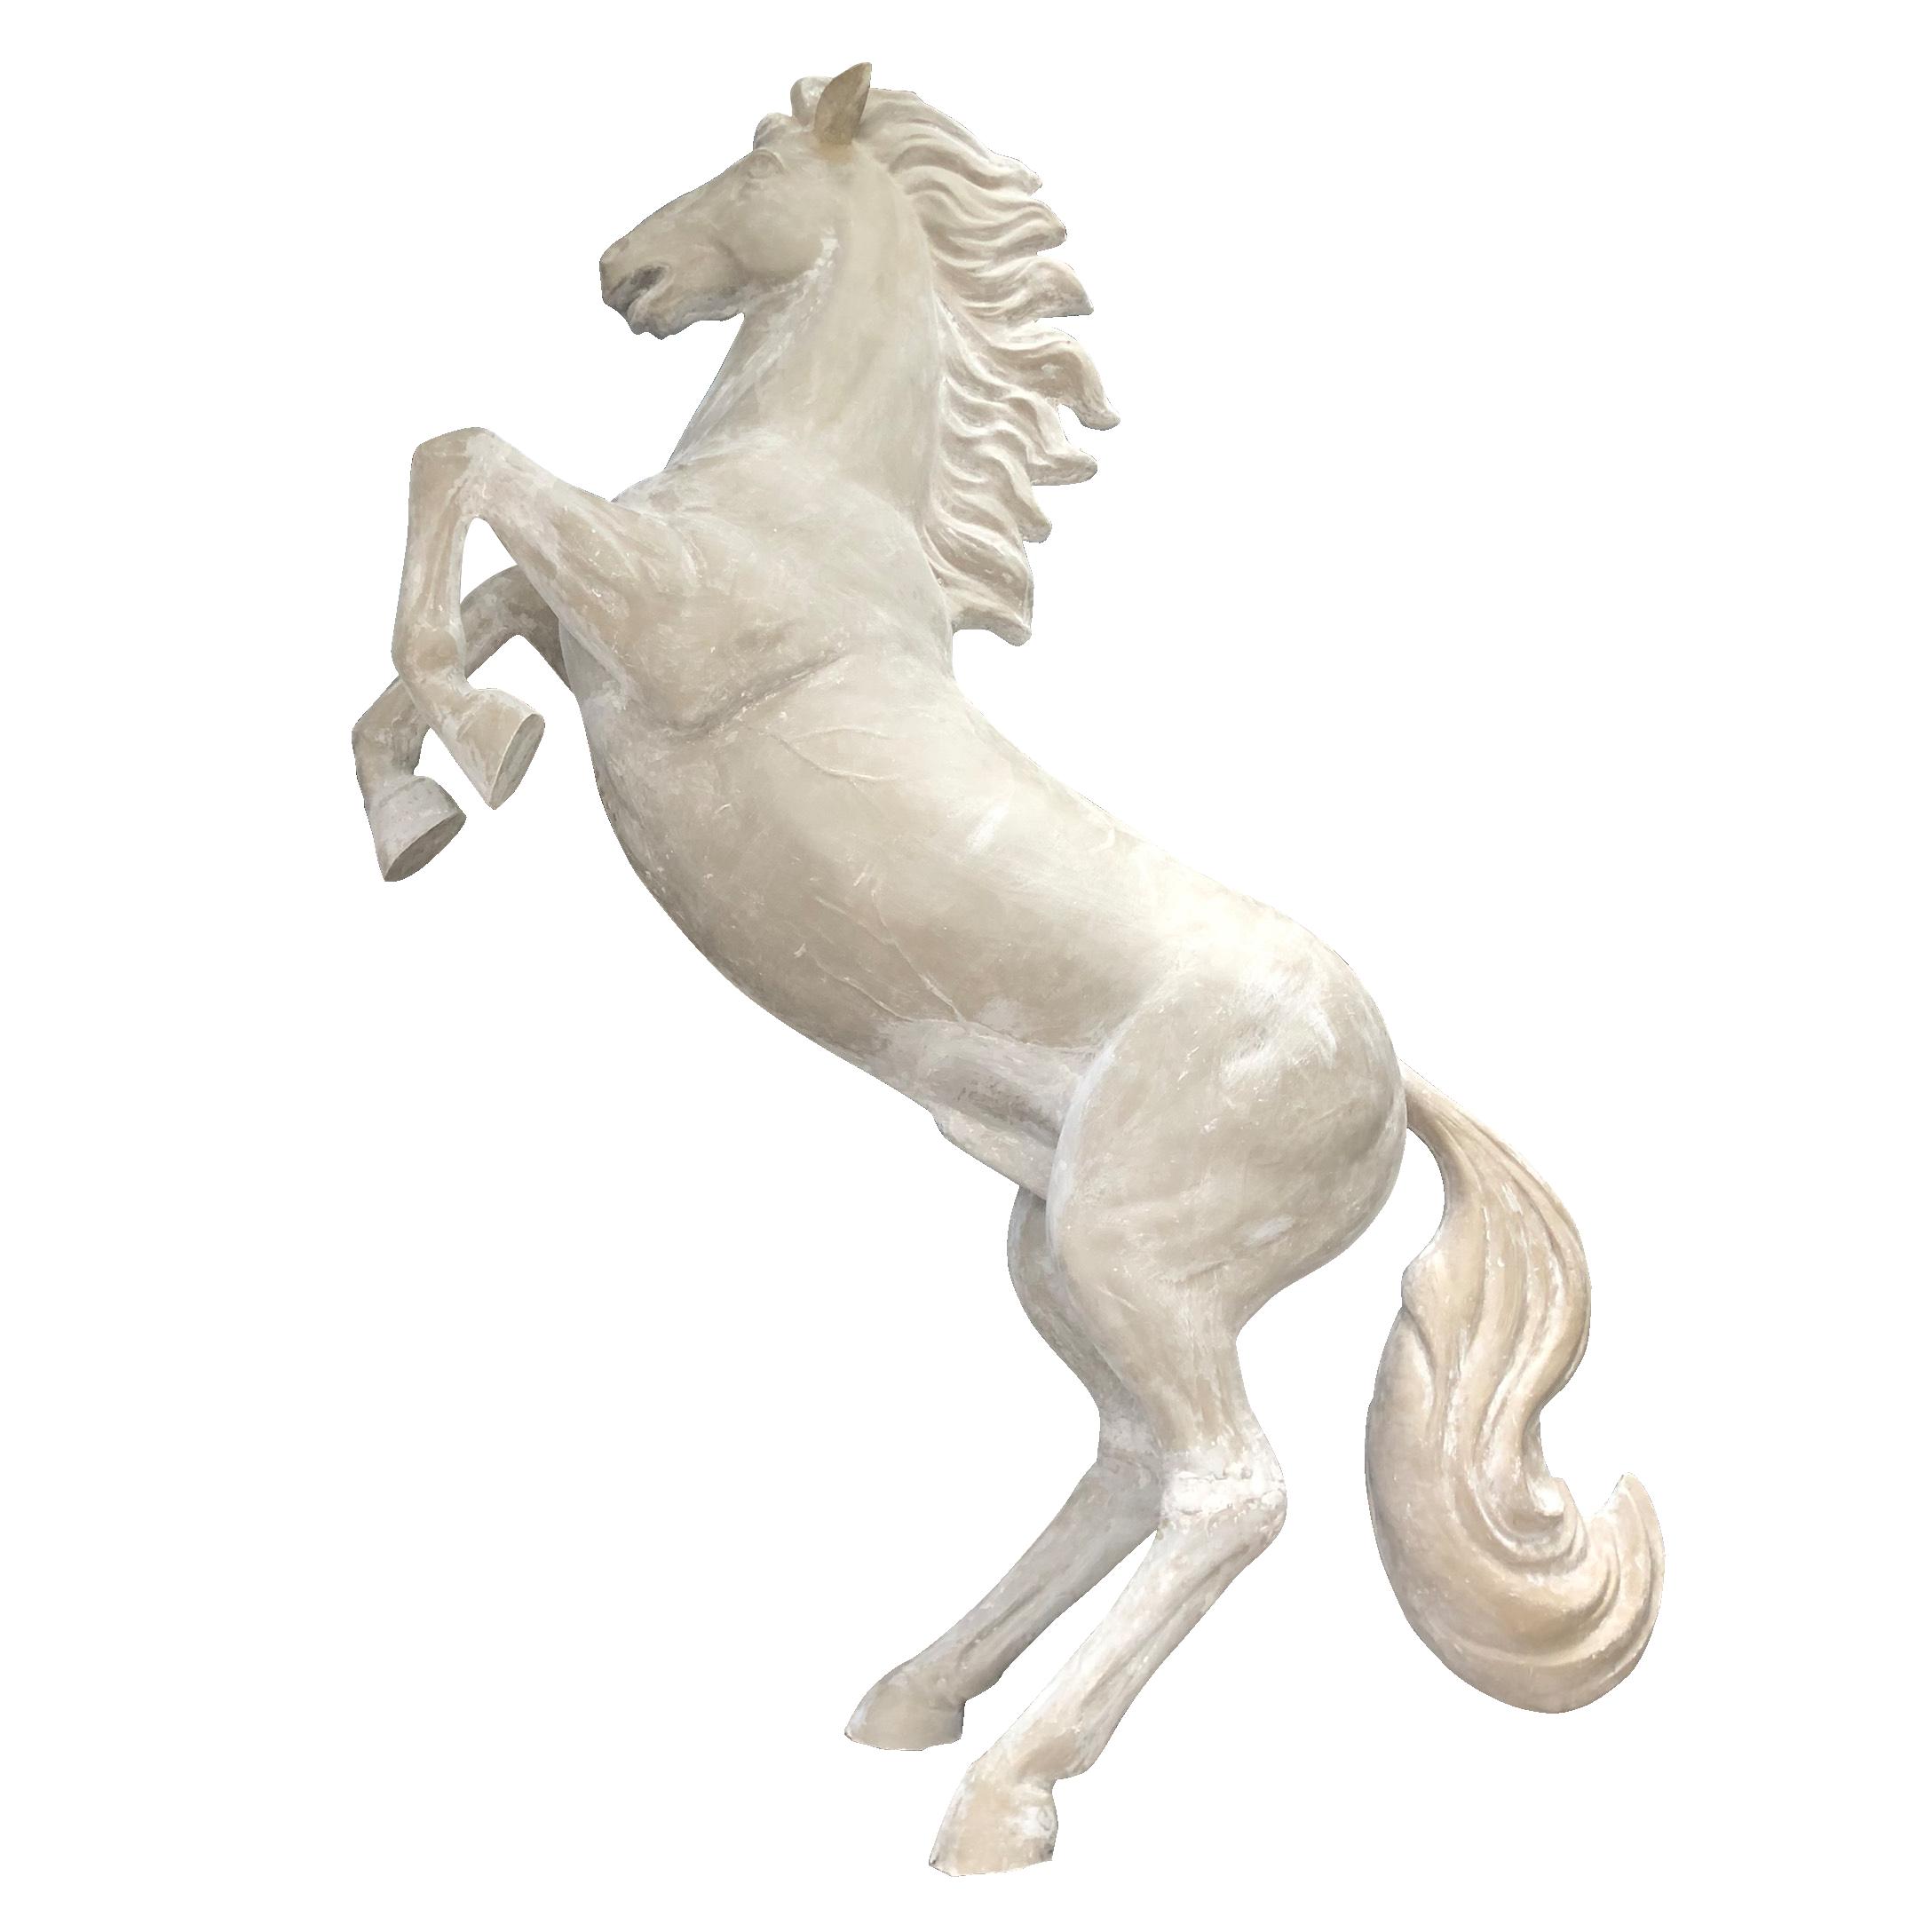 HORSE STATUE BY FIBERGLASS MATERIAL